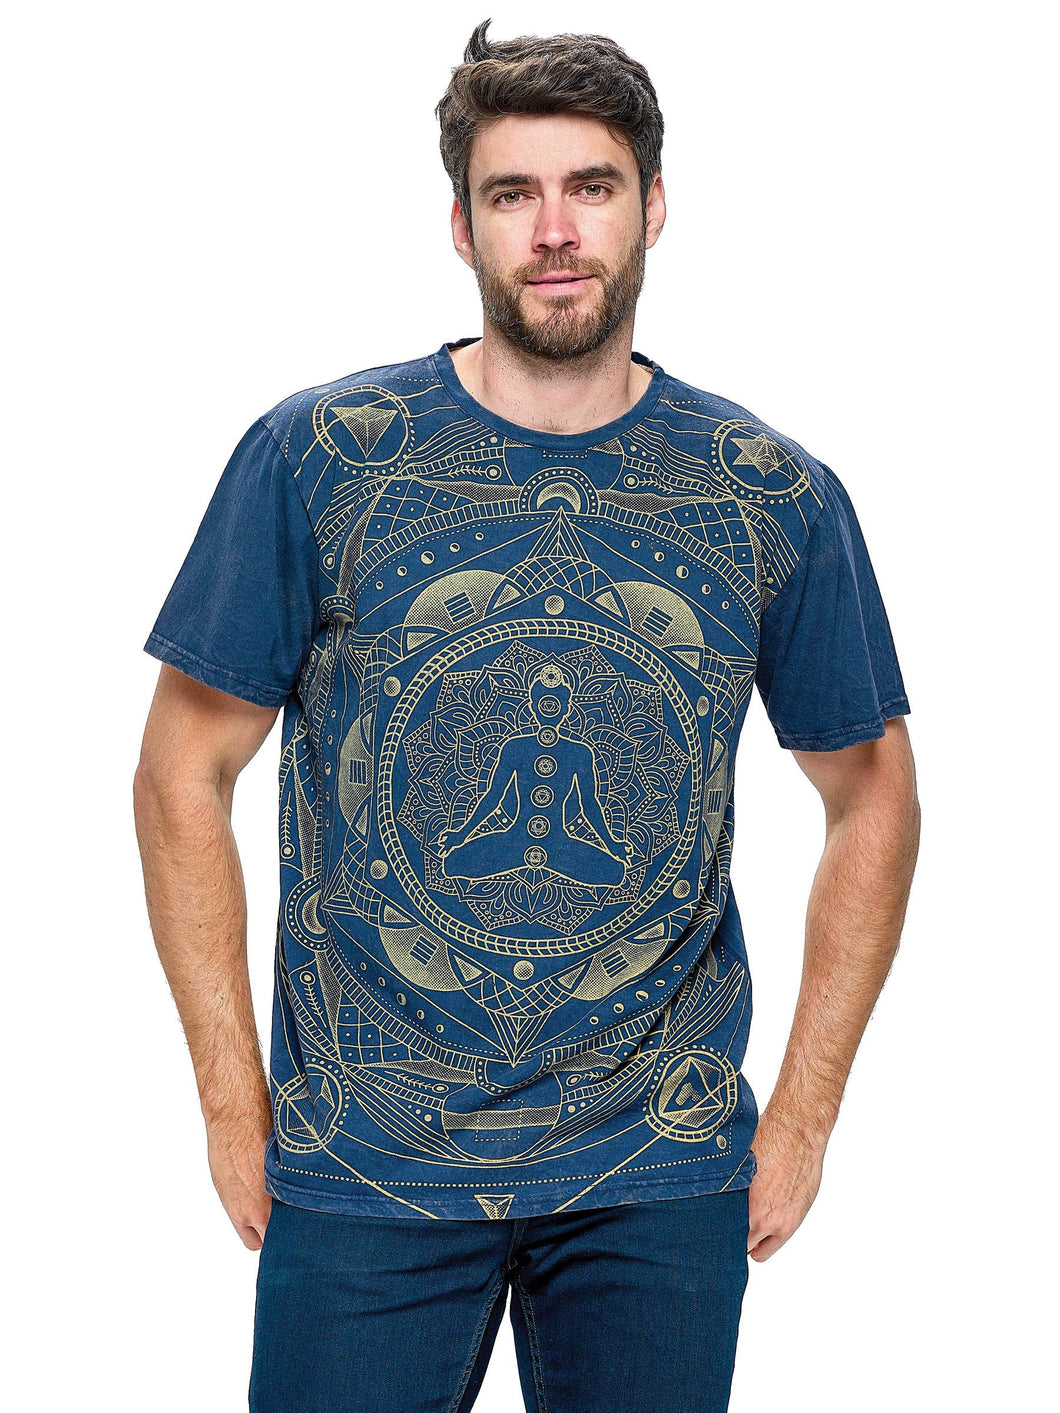 Men's T-Shirt Sacred Geometry Chakras Meditation: M / Blue / 100% Cotton